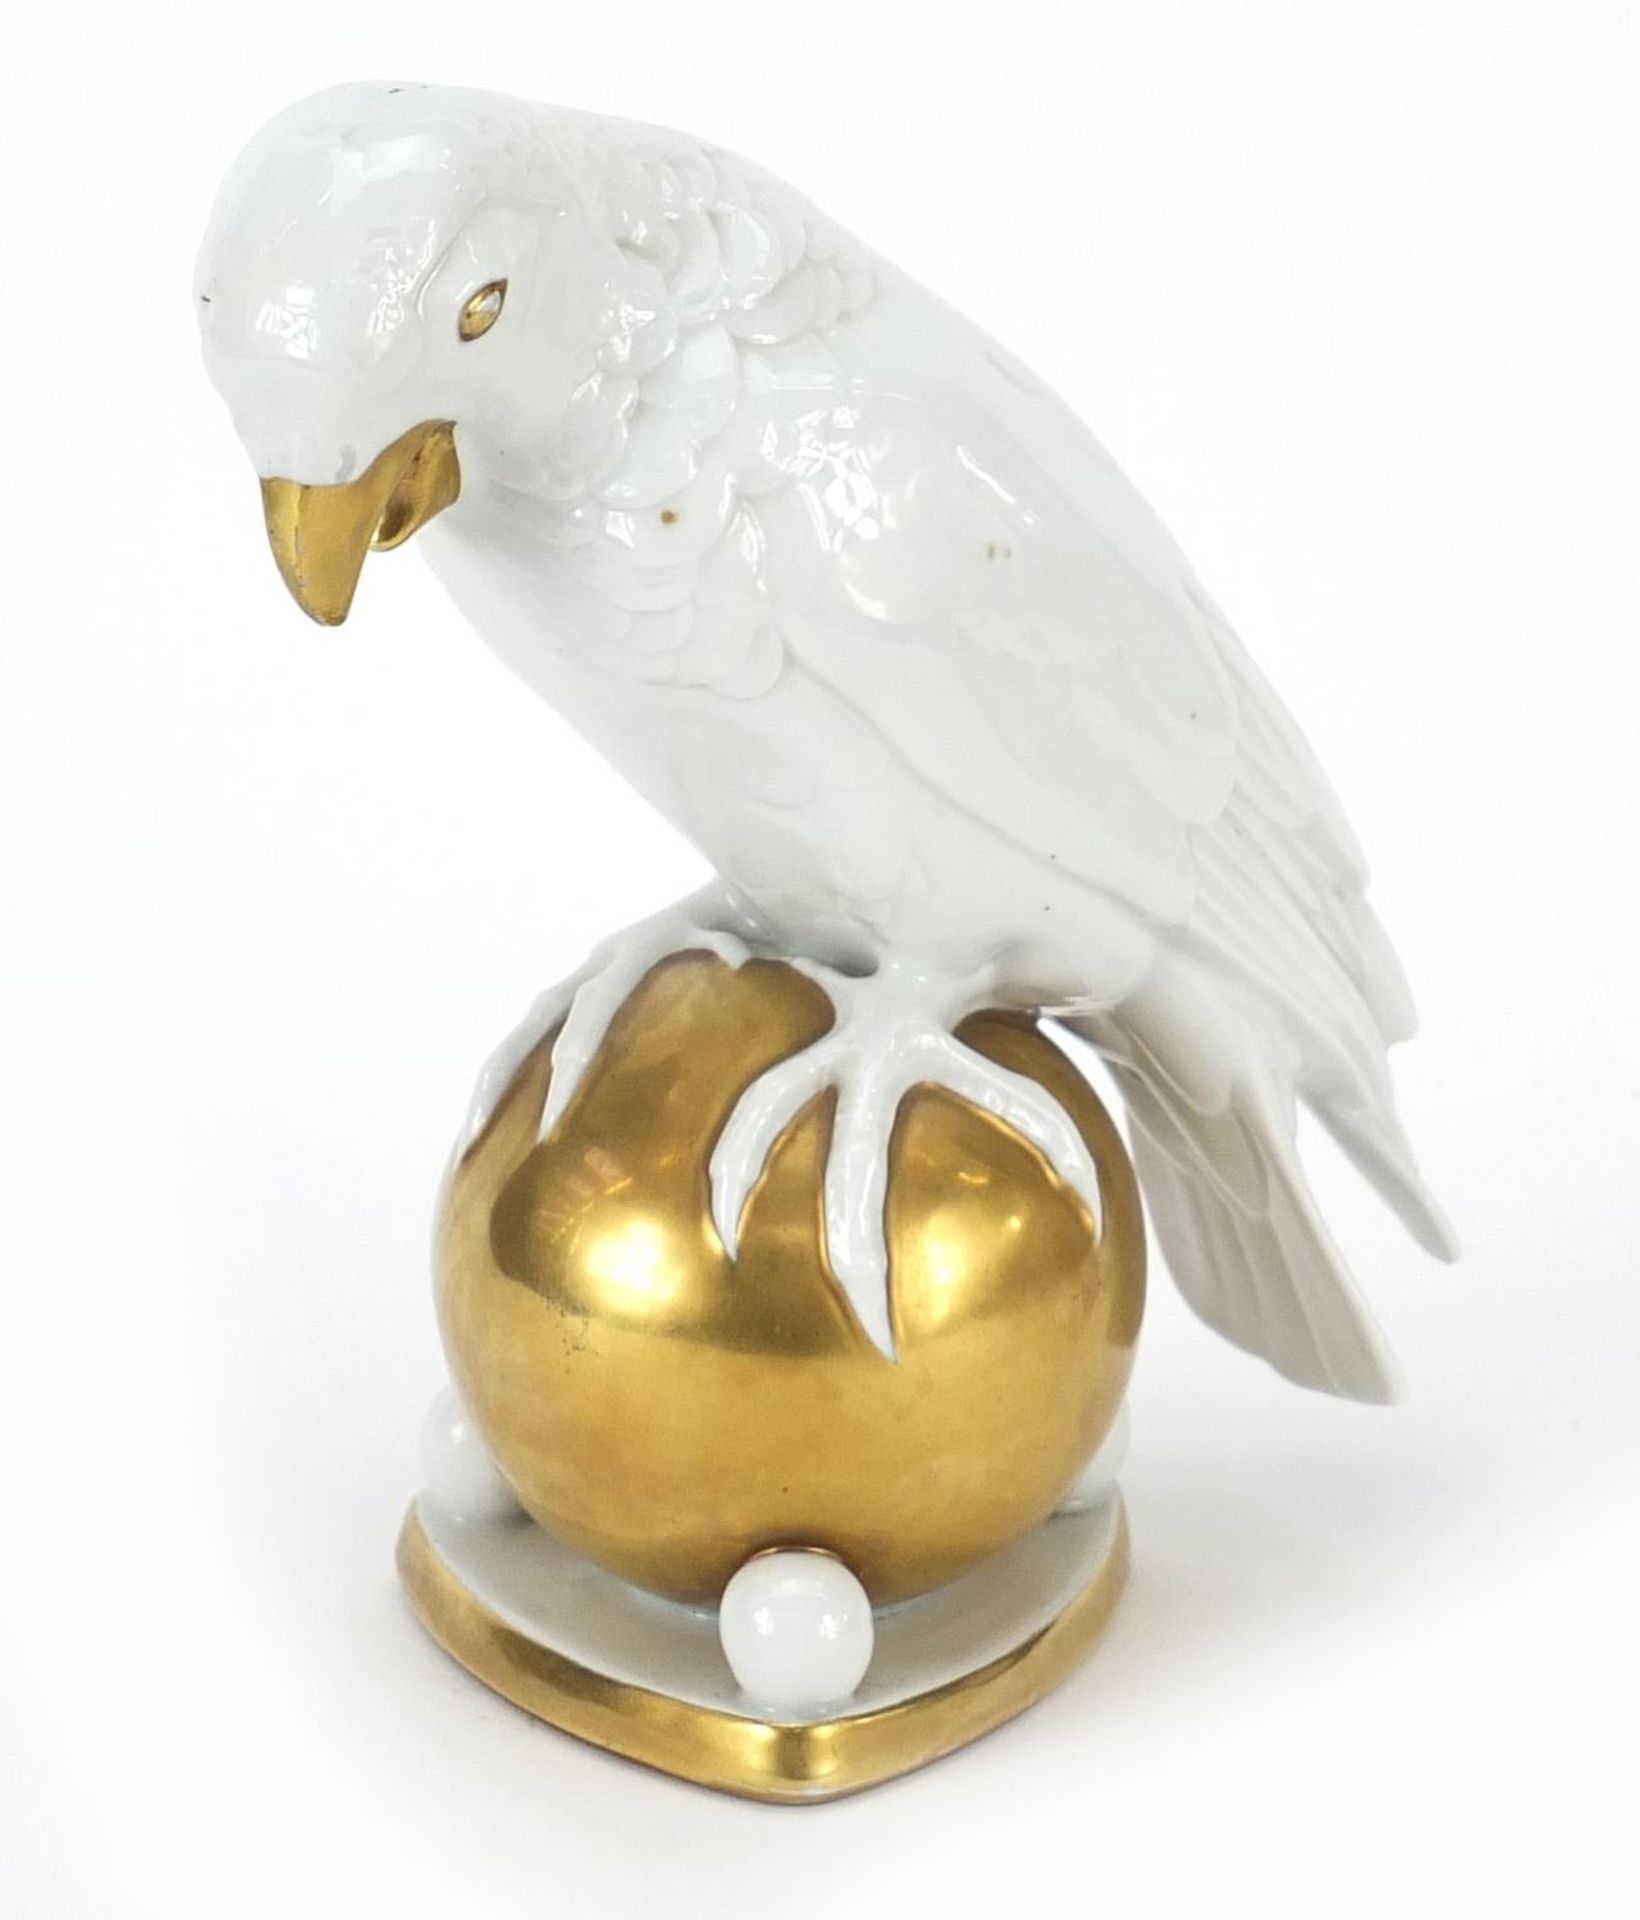 Hutschenreuther, German porcelain model of a parrot on a ball, 20.5cm high